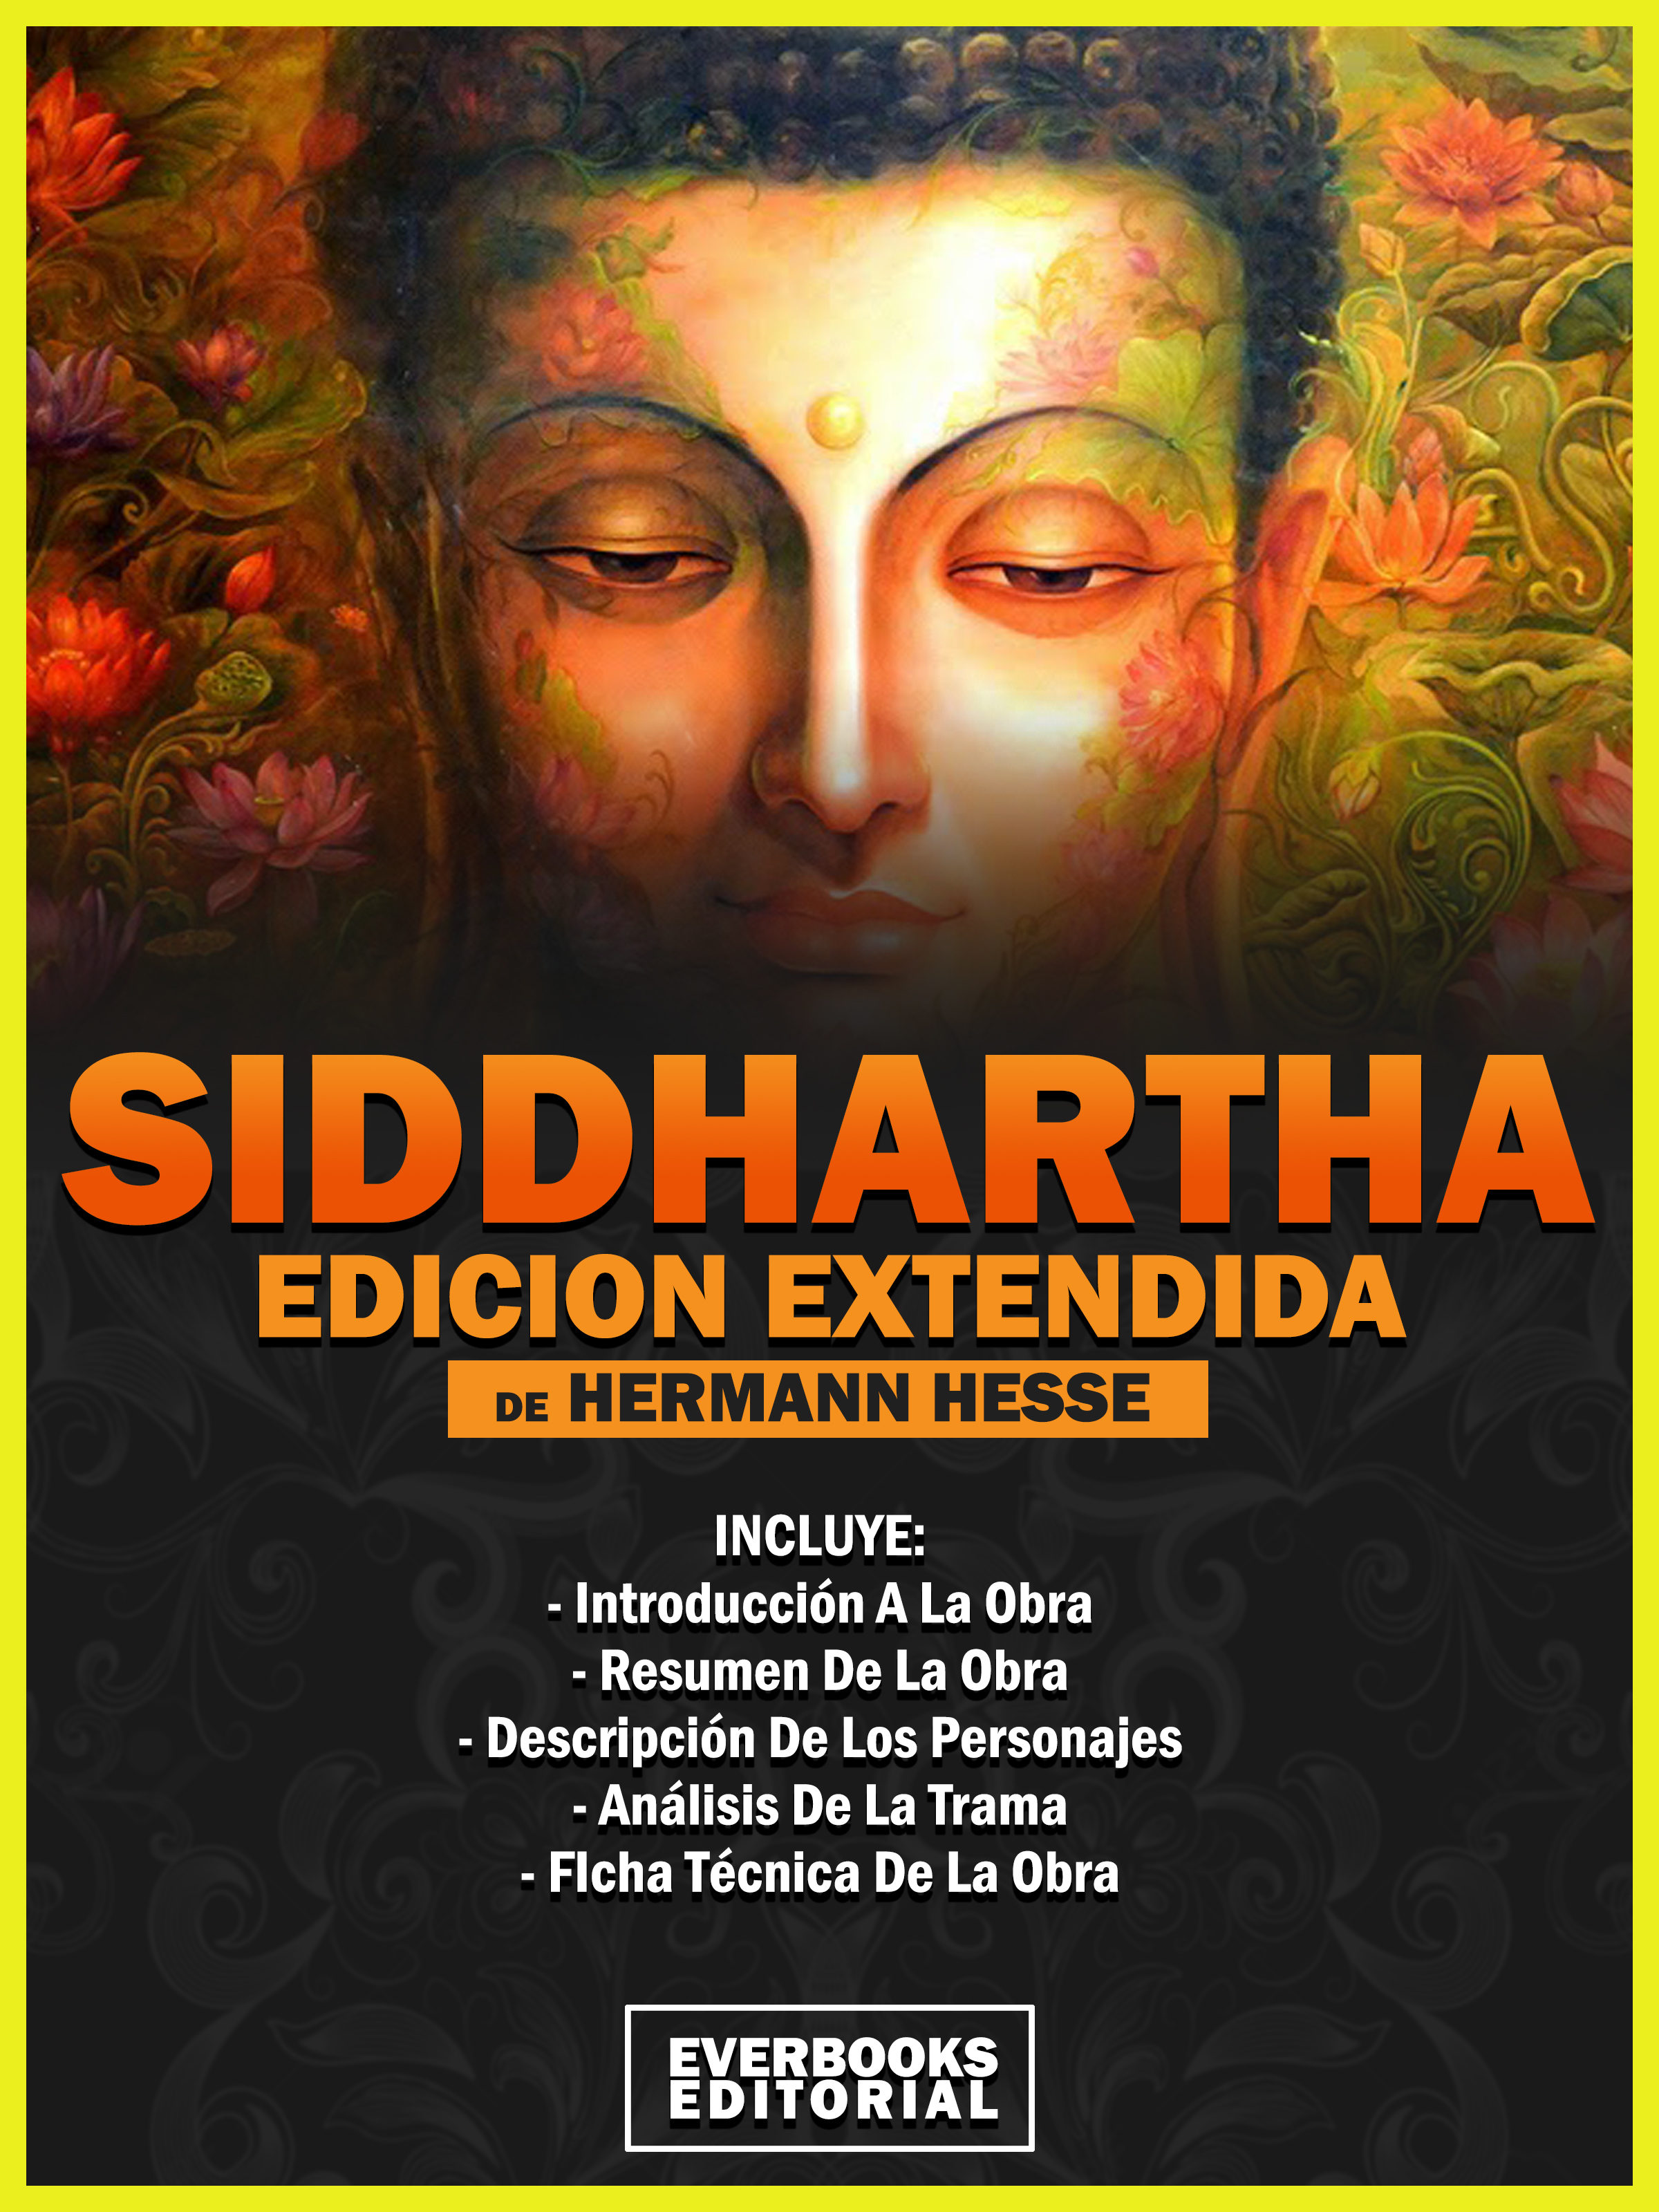 SIDDHARTHA (EDICION EXTENDIDA) - DE HERMANN HESSE. EVERBOOKS EDITORIAL